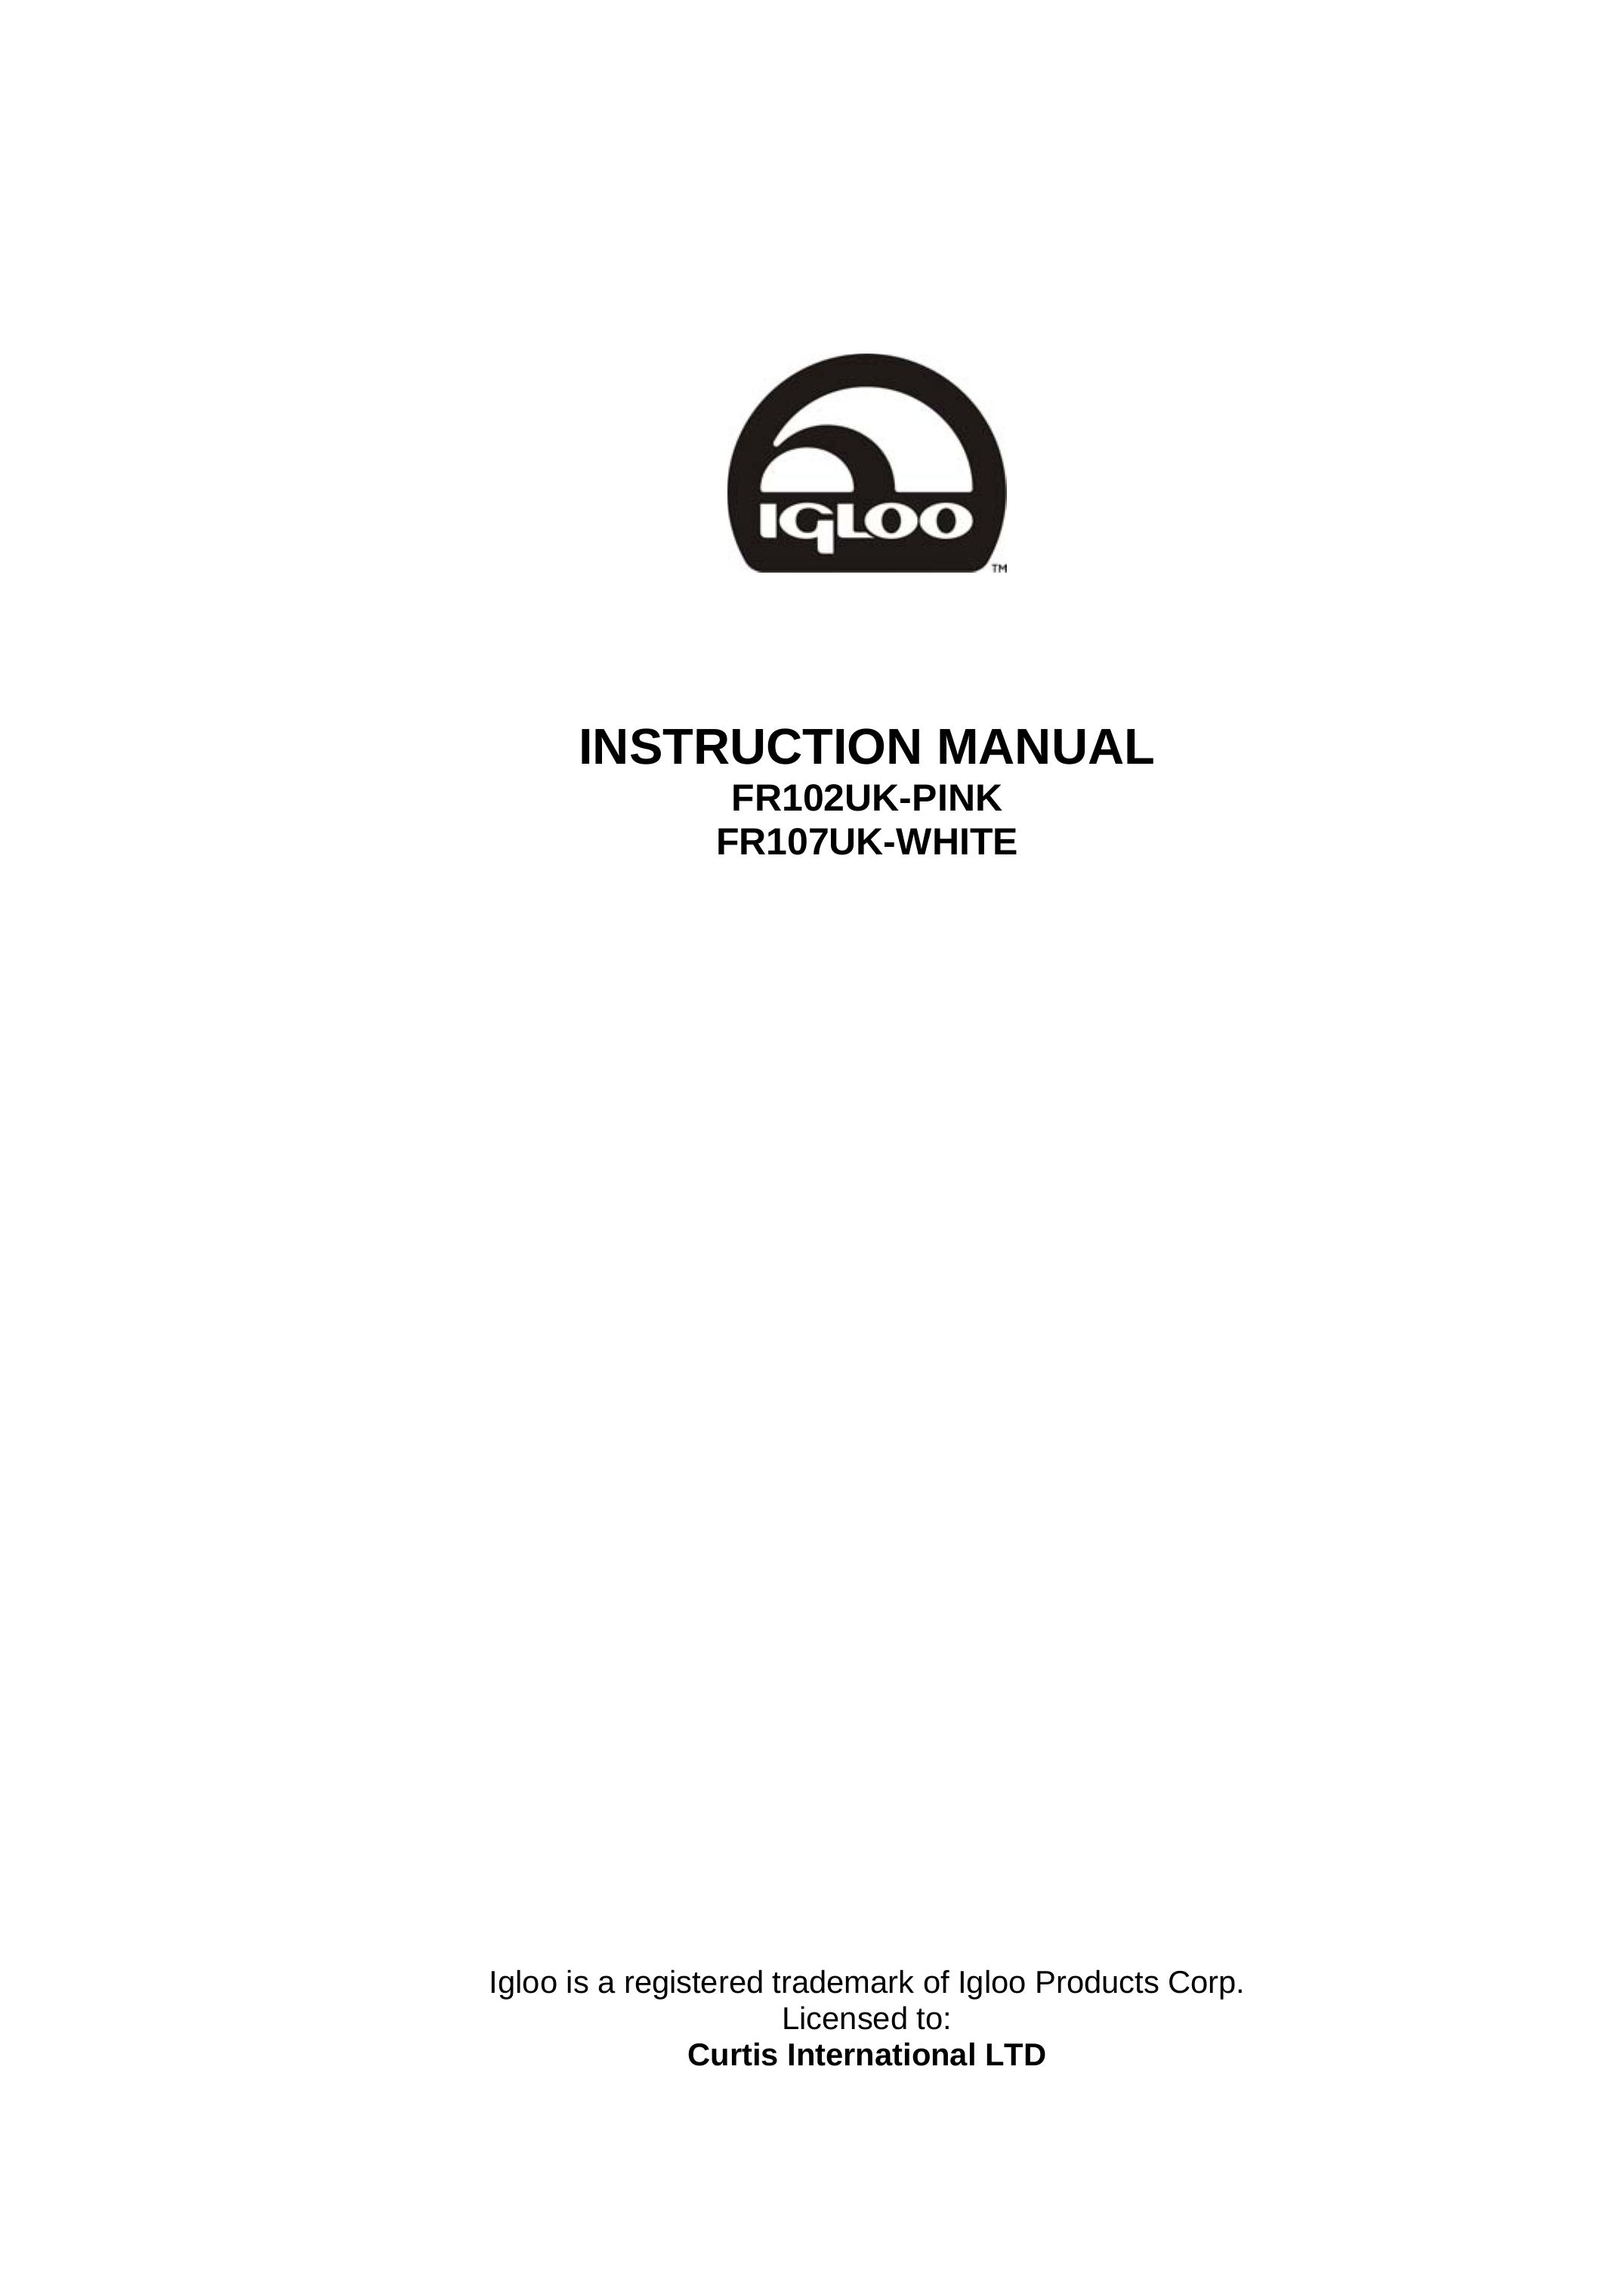 Igloo FR107UK-WHITE Refrigerator User Manual